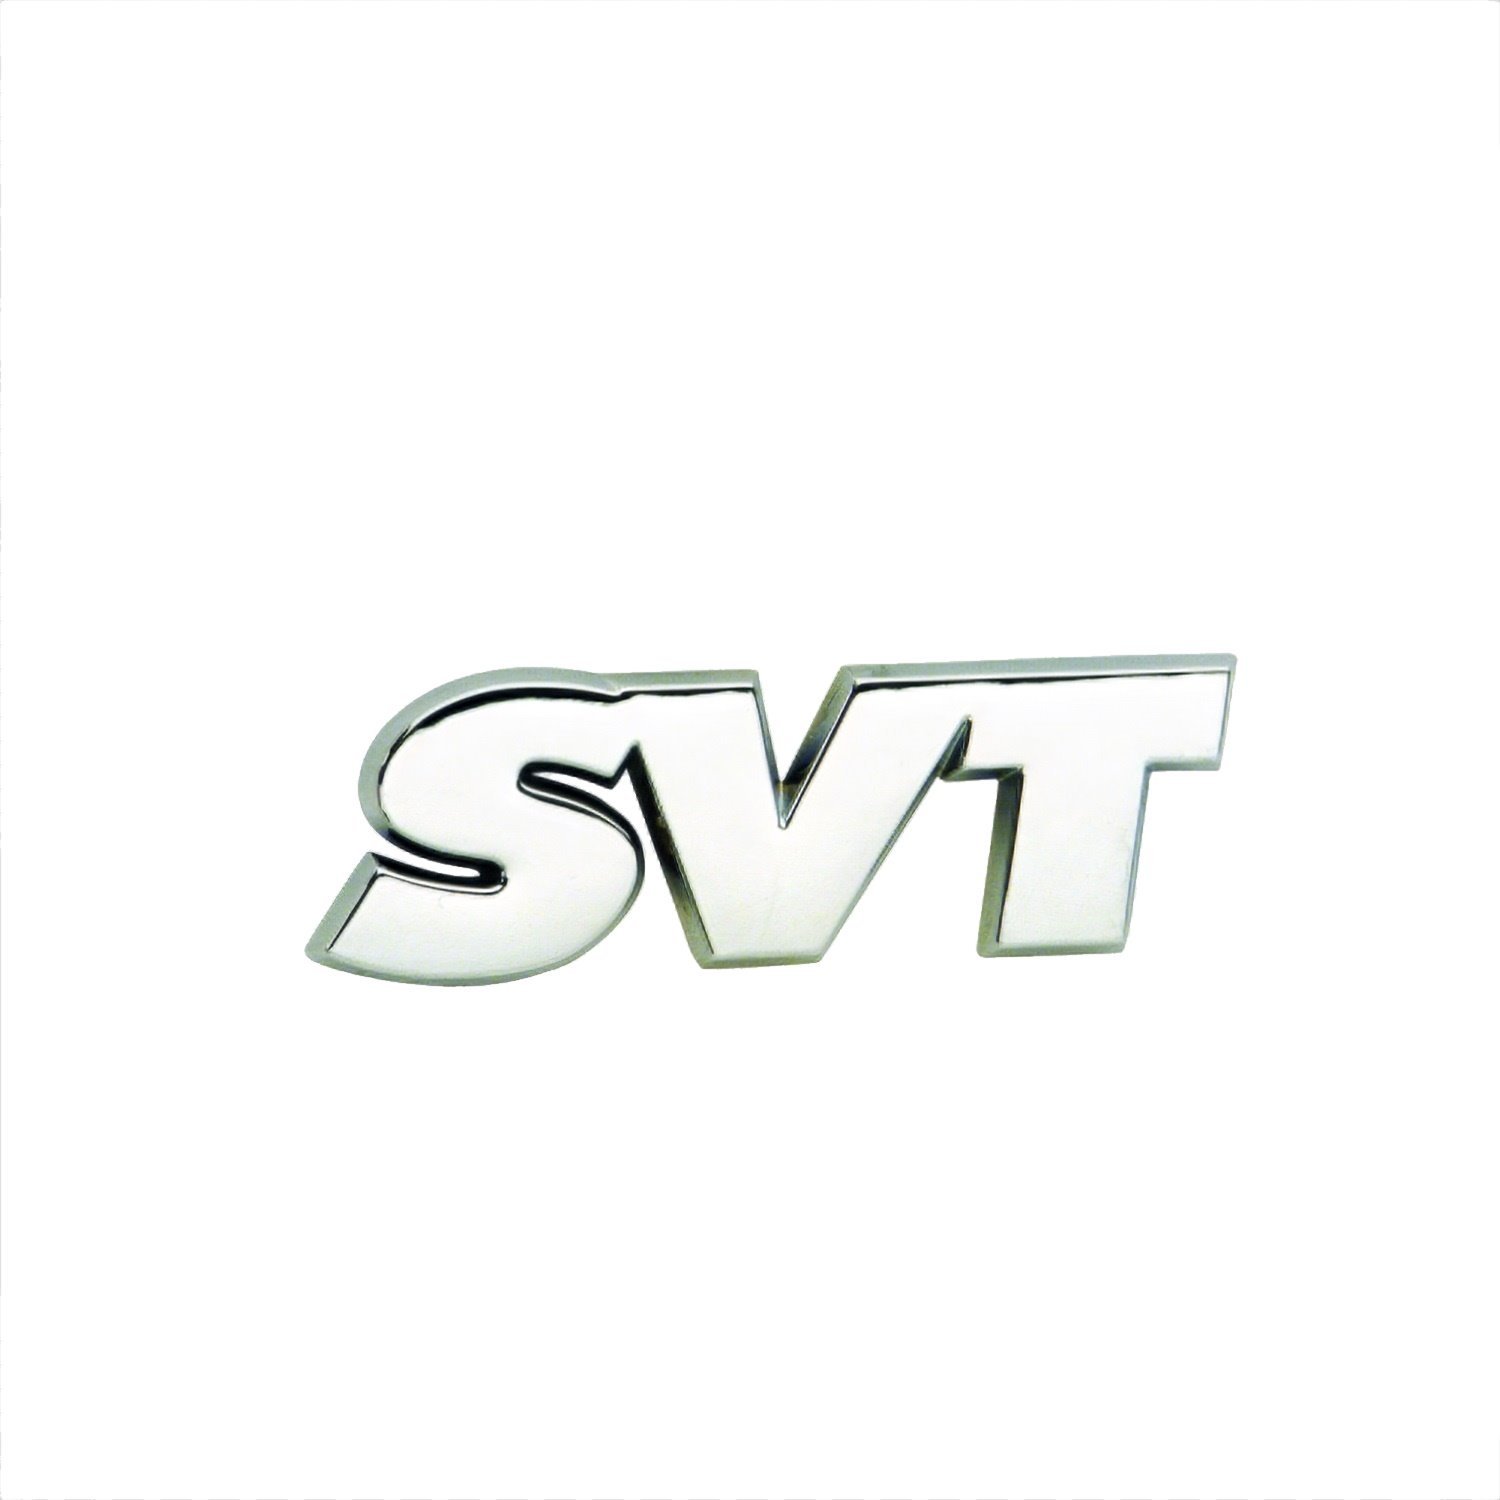 SVT Deck Lid Emblem Original Equipment on SVT Mustang Cobra and SVT Contour